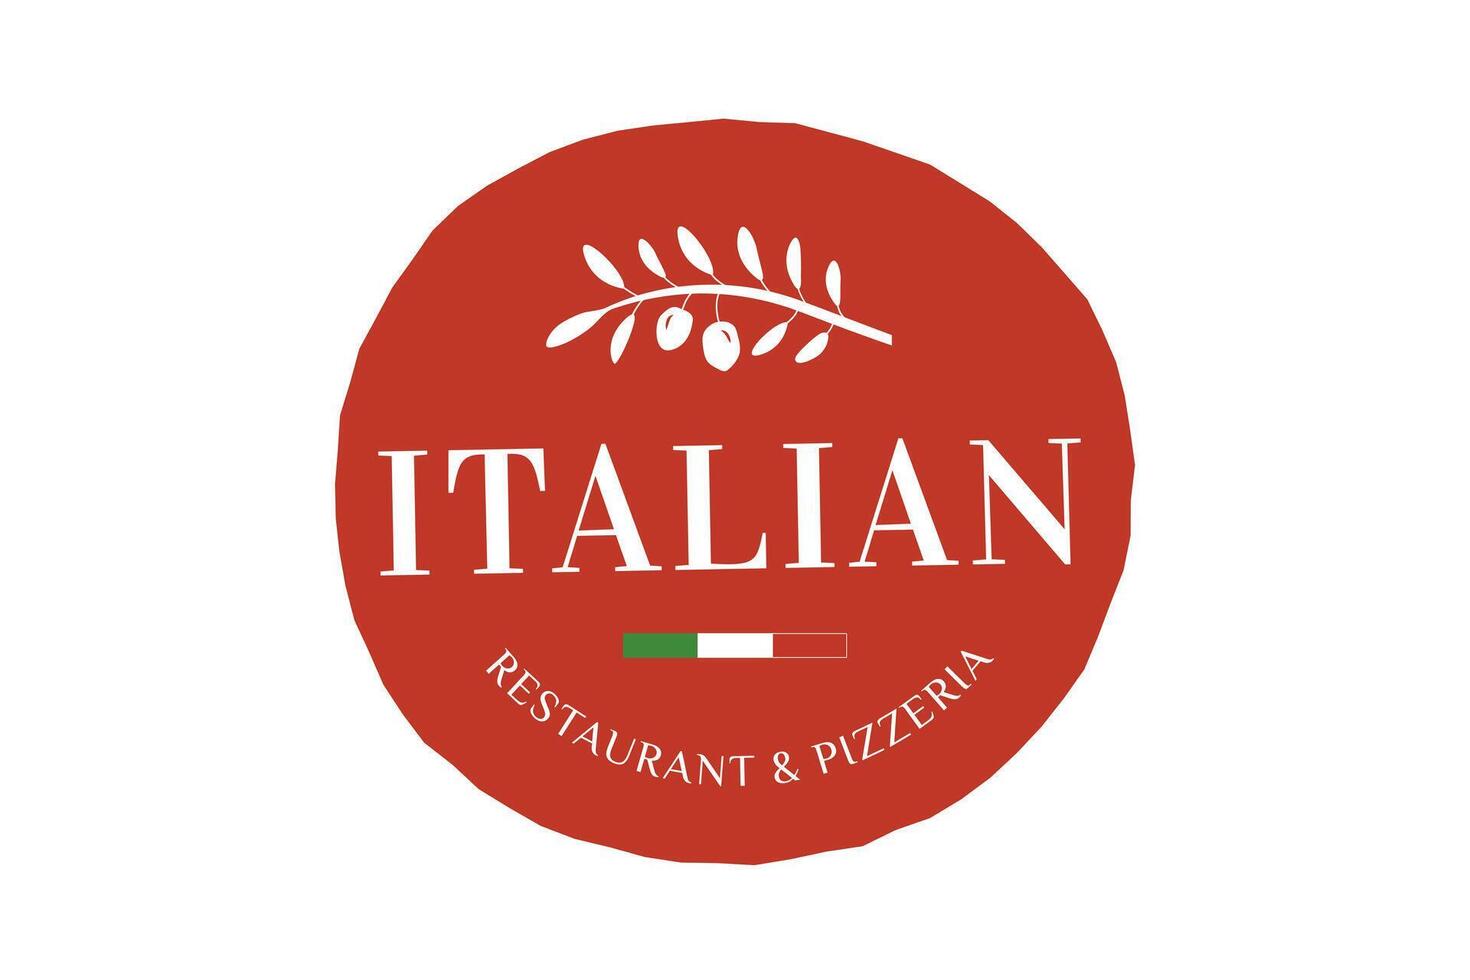 italien Pizza restaurant rond rouge logo badge vecteur